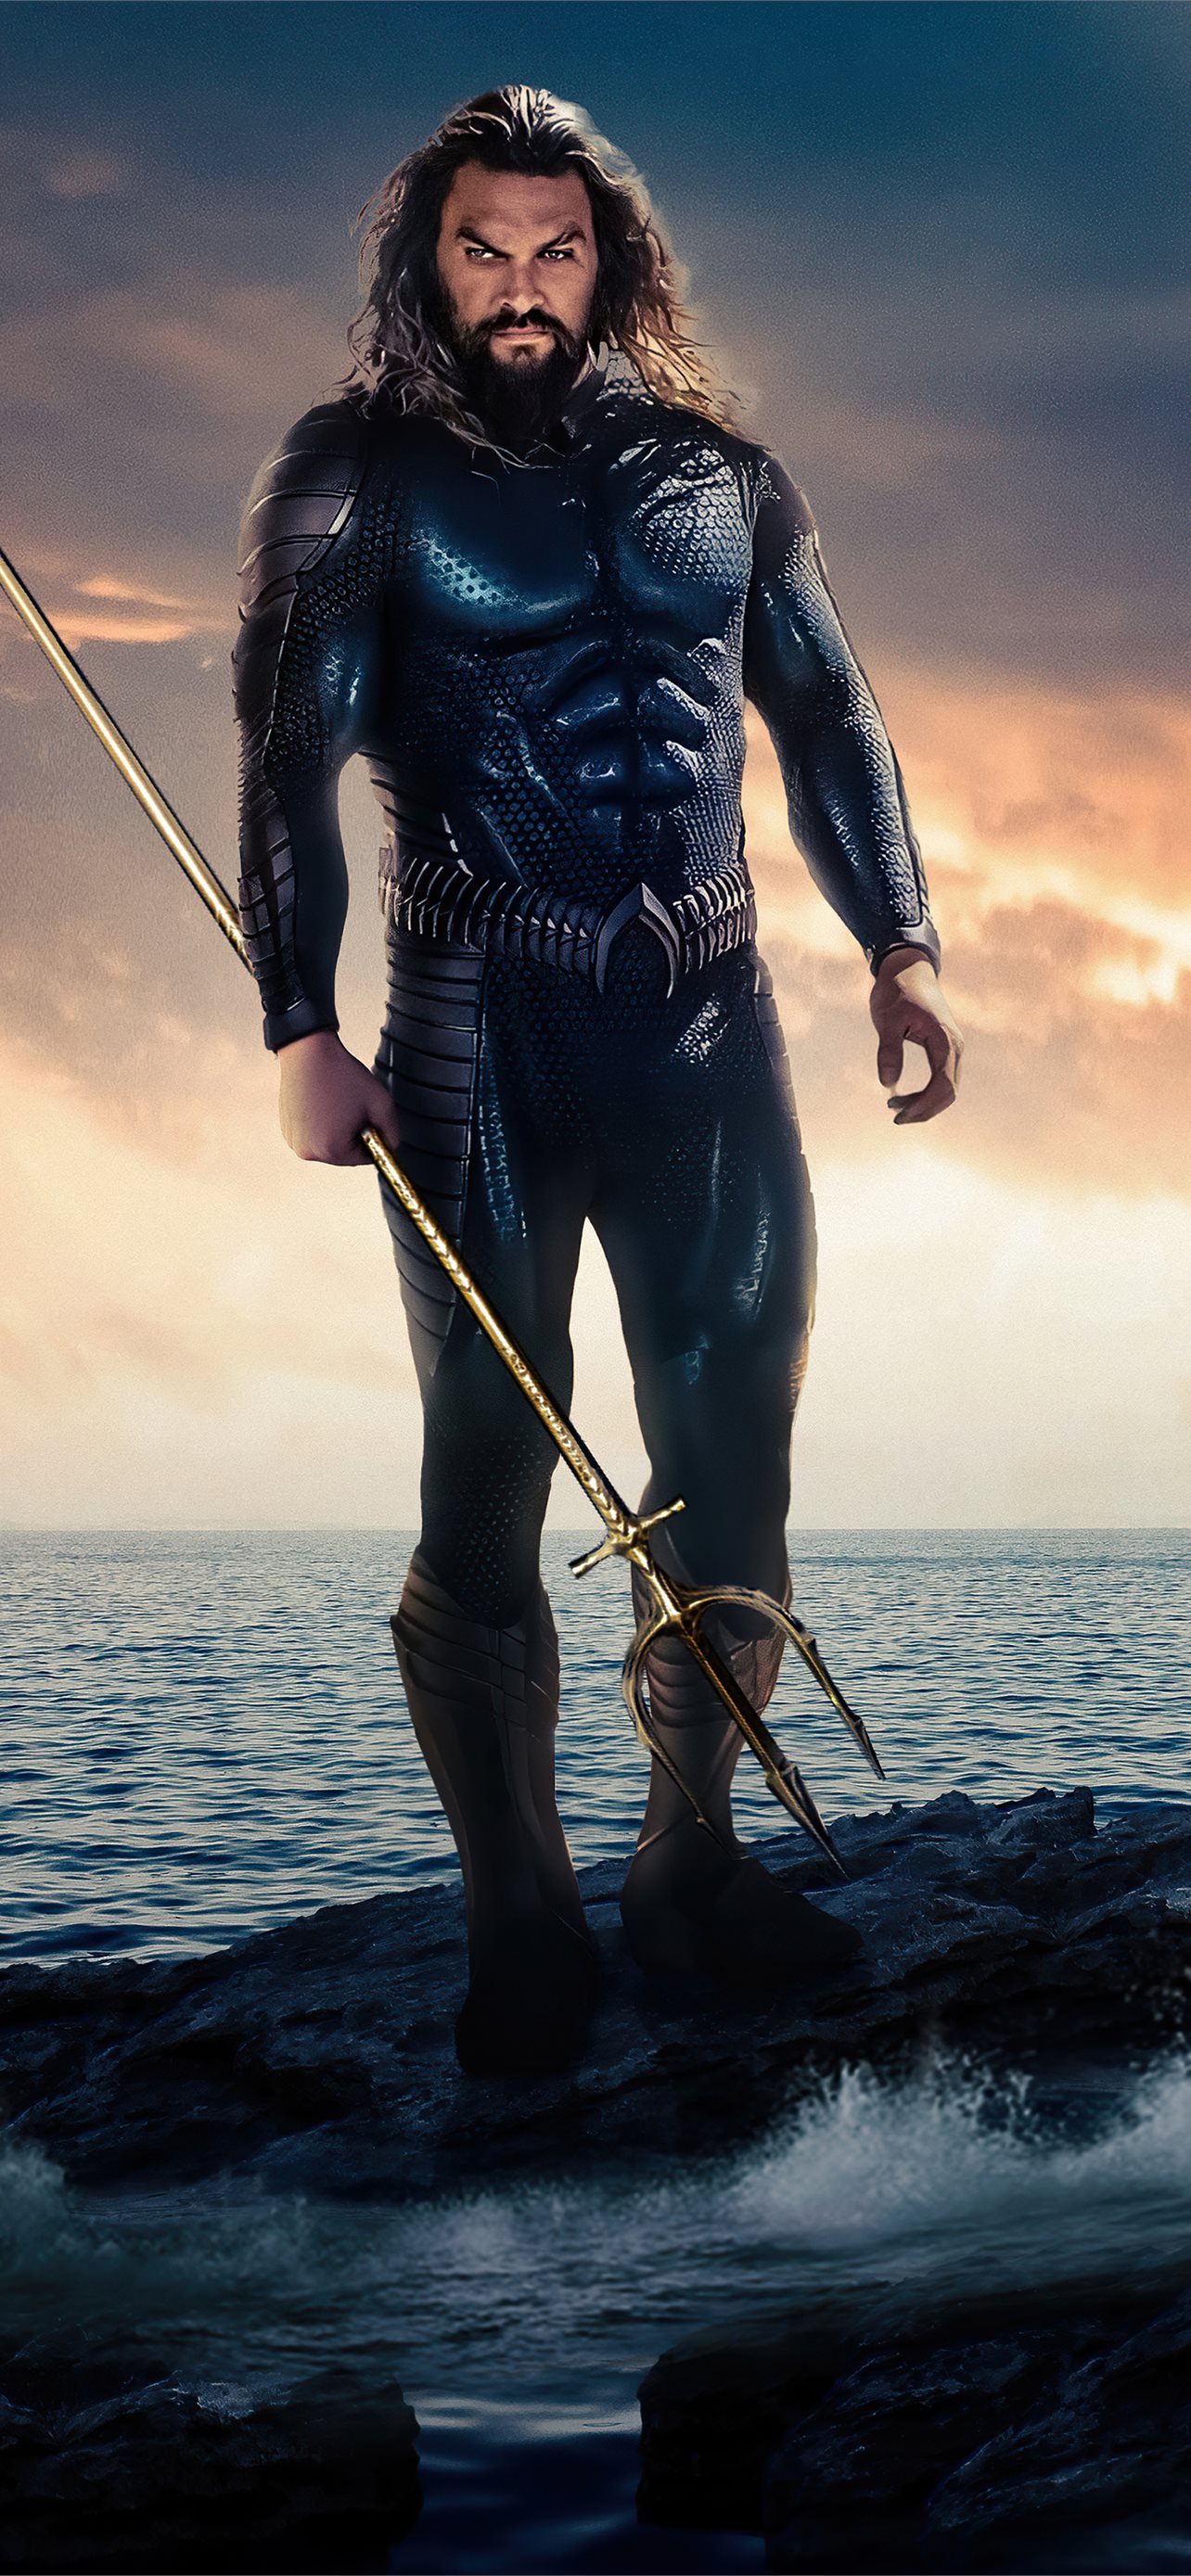 Jason Momoa as Aquaman Wallpaper 4k Ultra HD ID4522